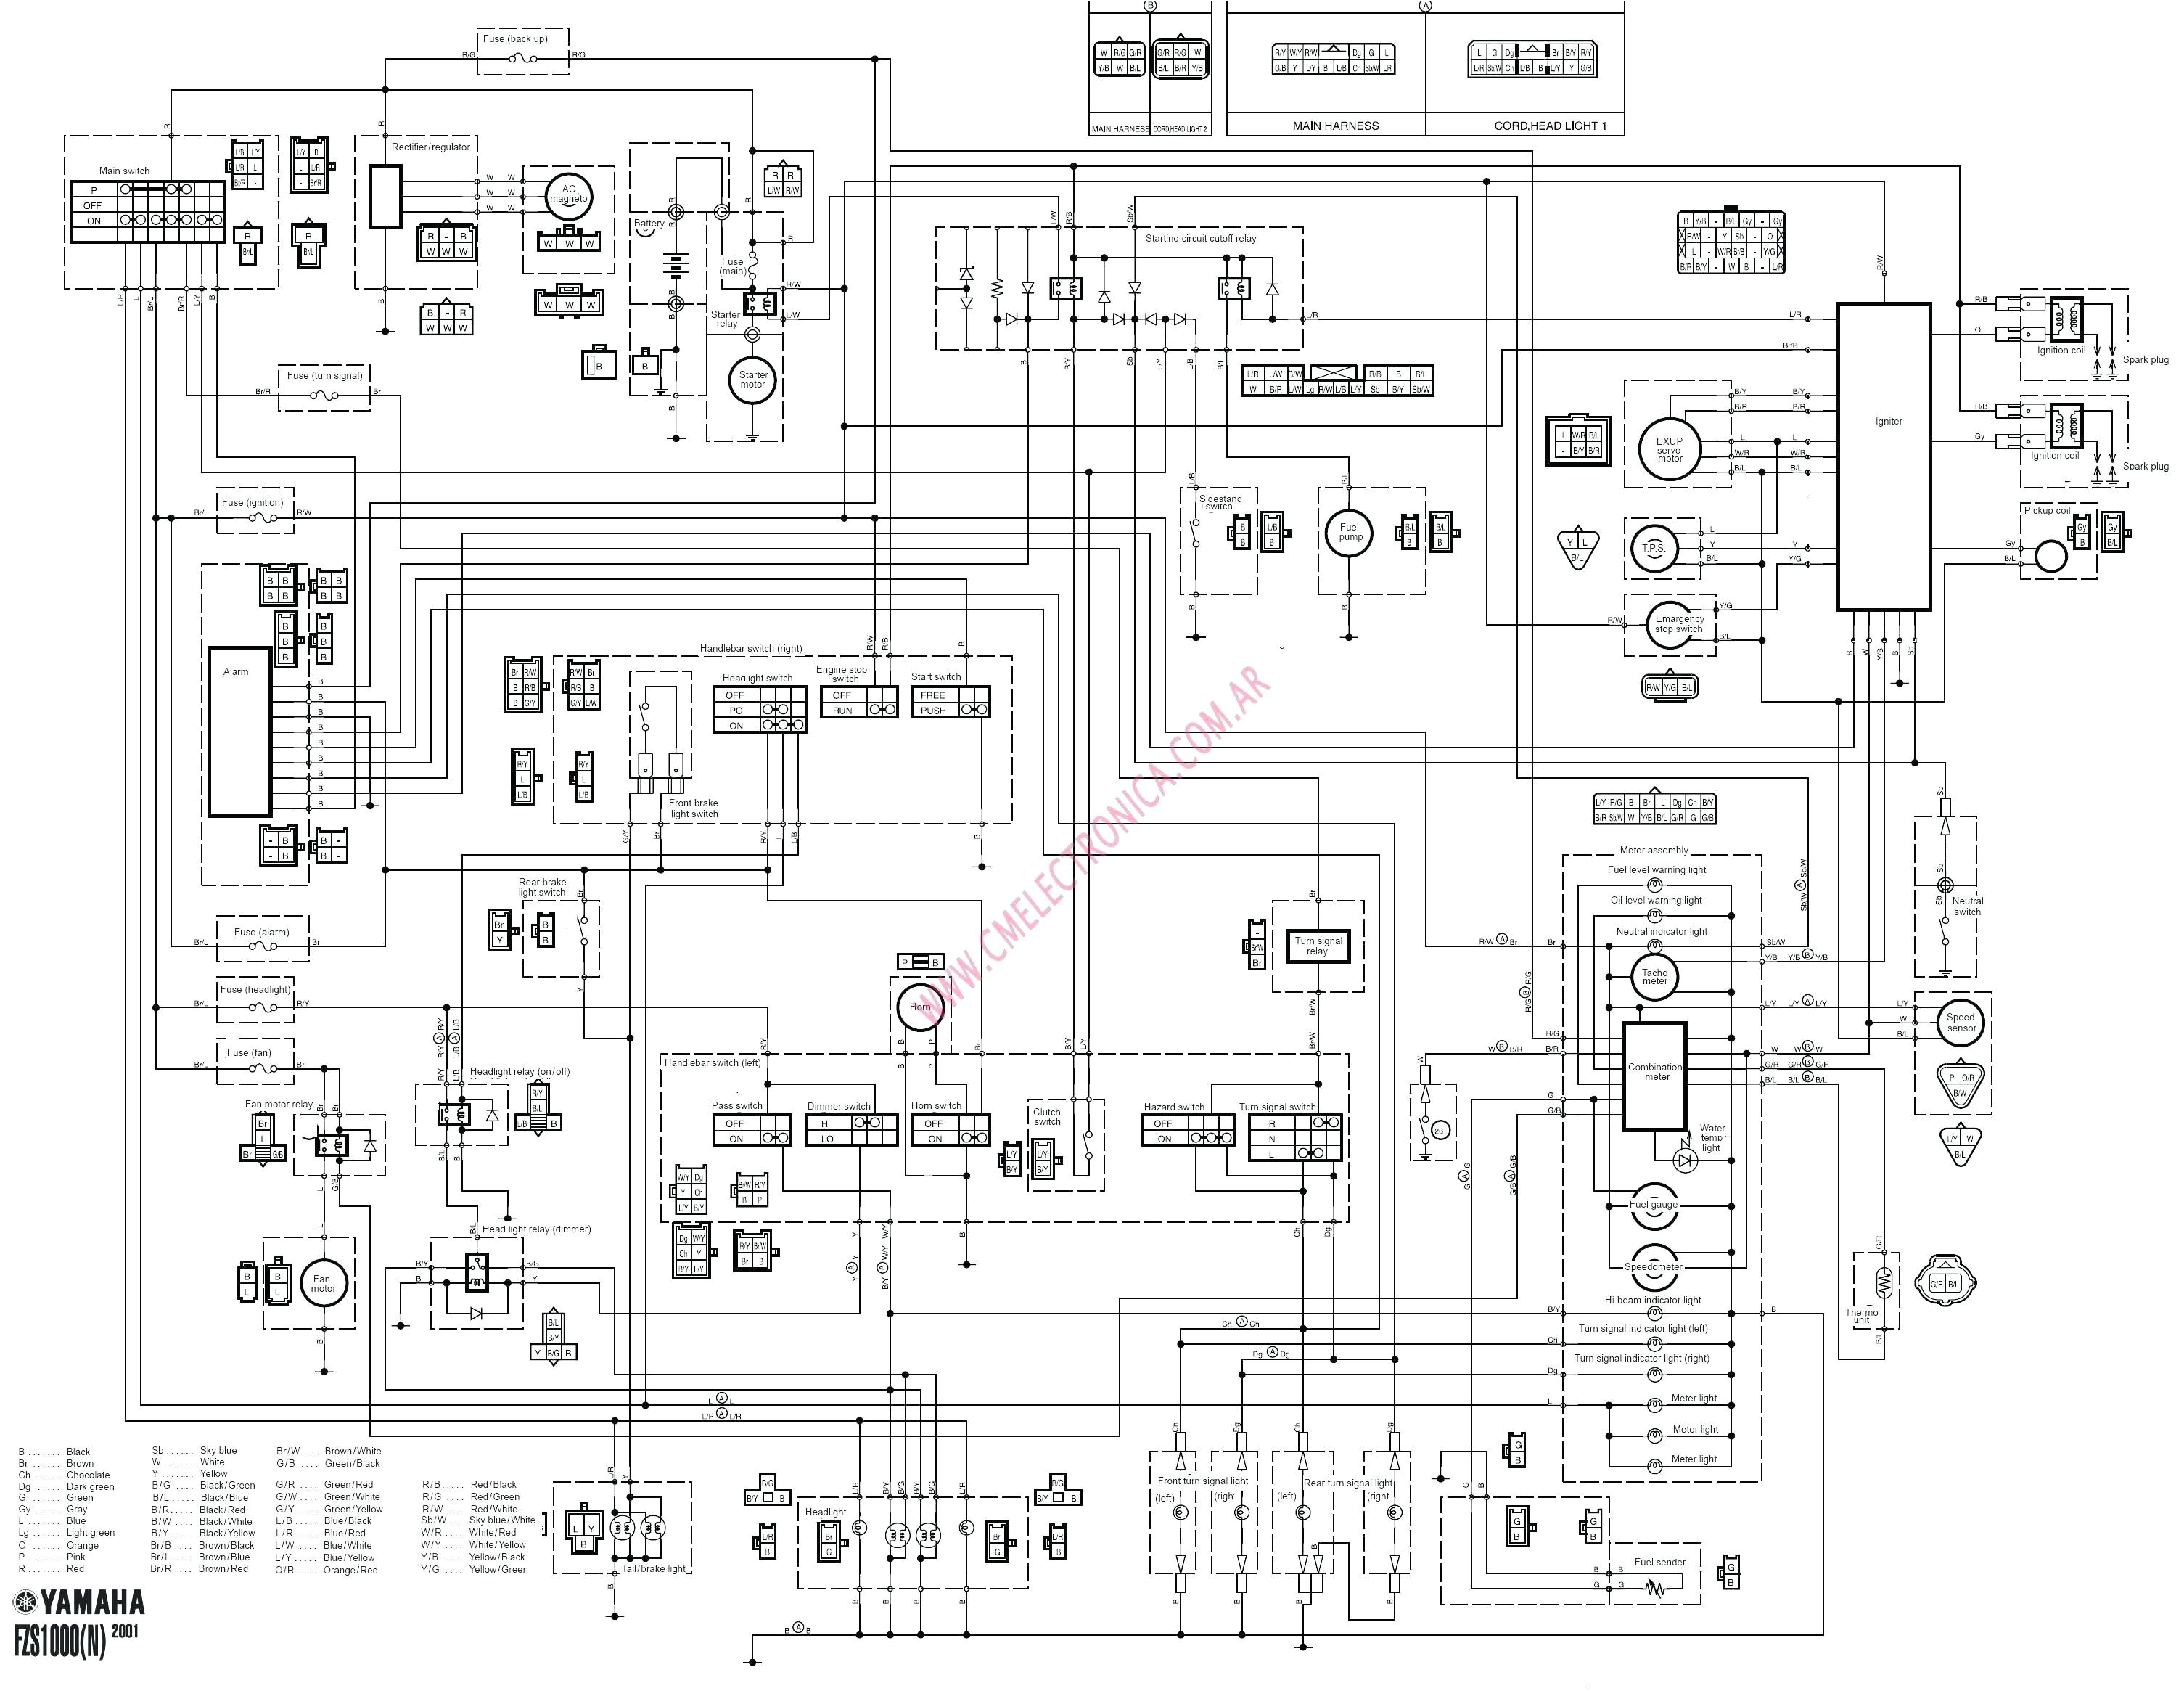 viper 350 plus wiring diagram auto electrical wiring diagramrelated with viper 350 plus wiring diagram